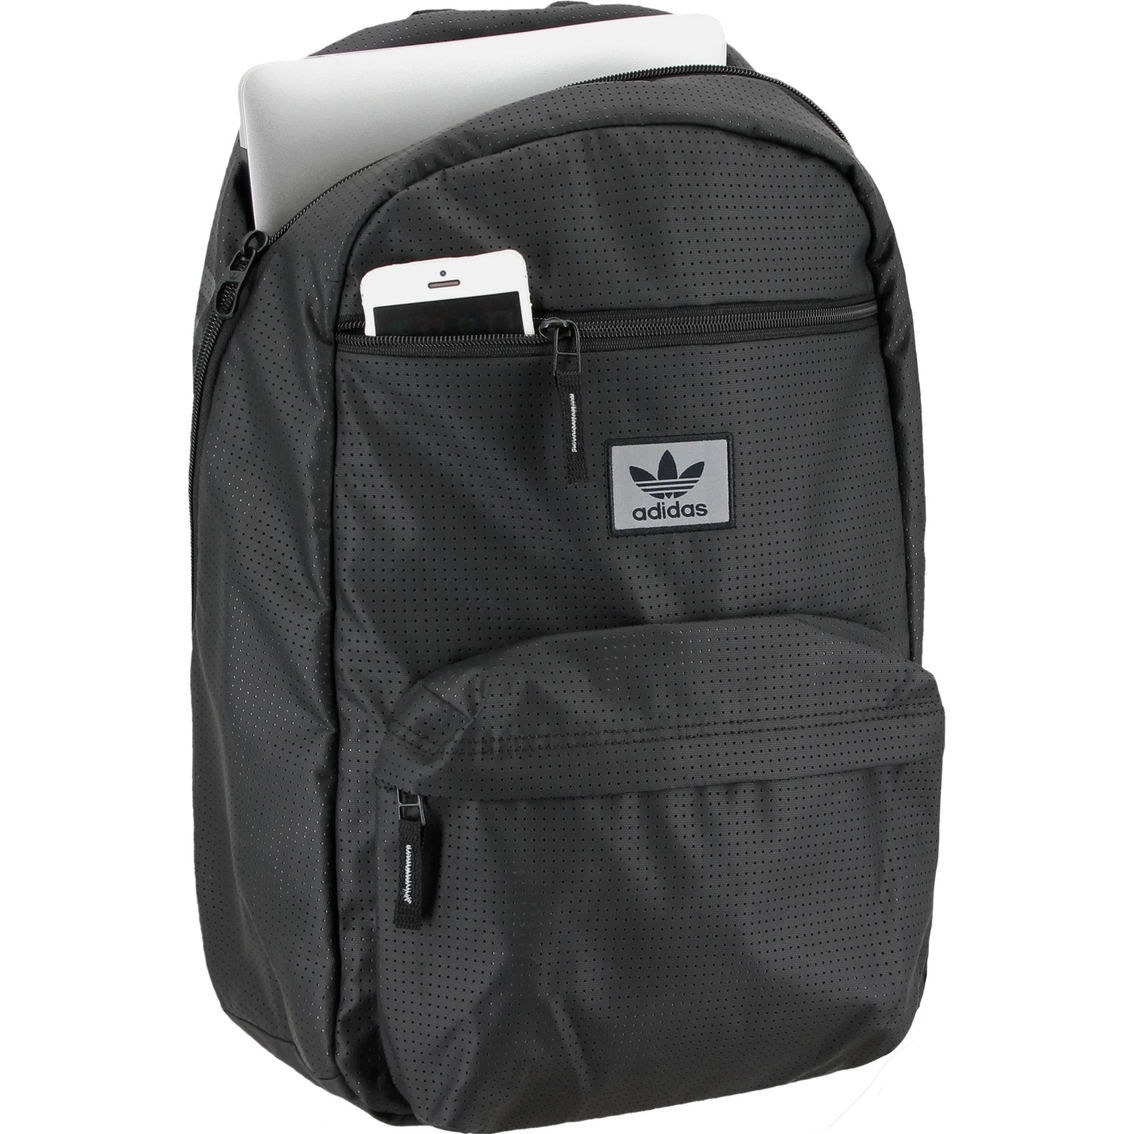 Adidas Originals National Plus Backpack | Backpacks | Clothing ...